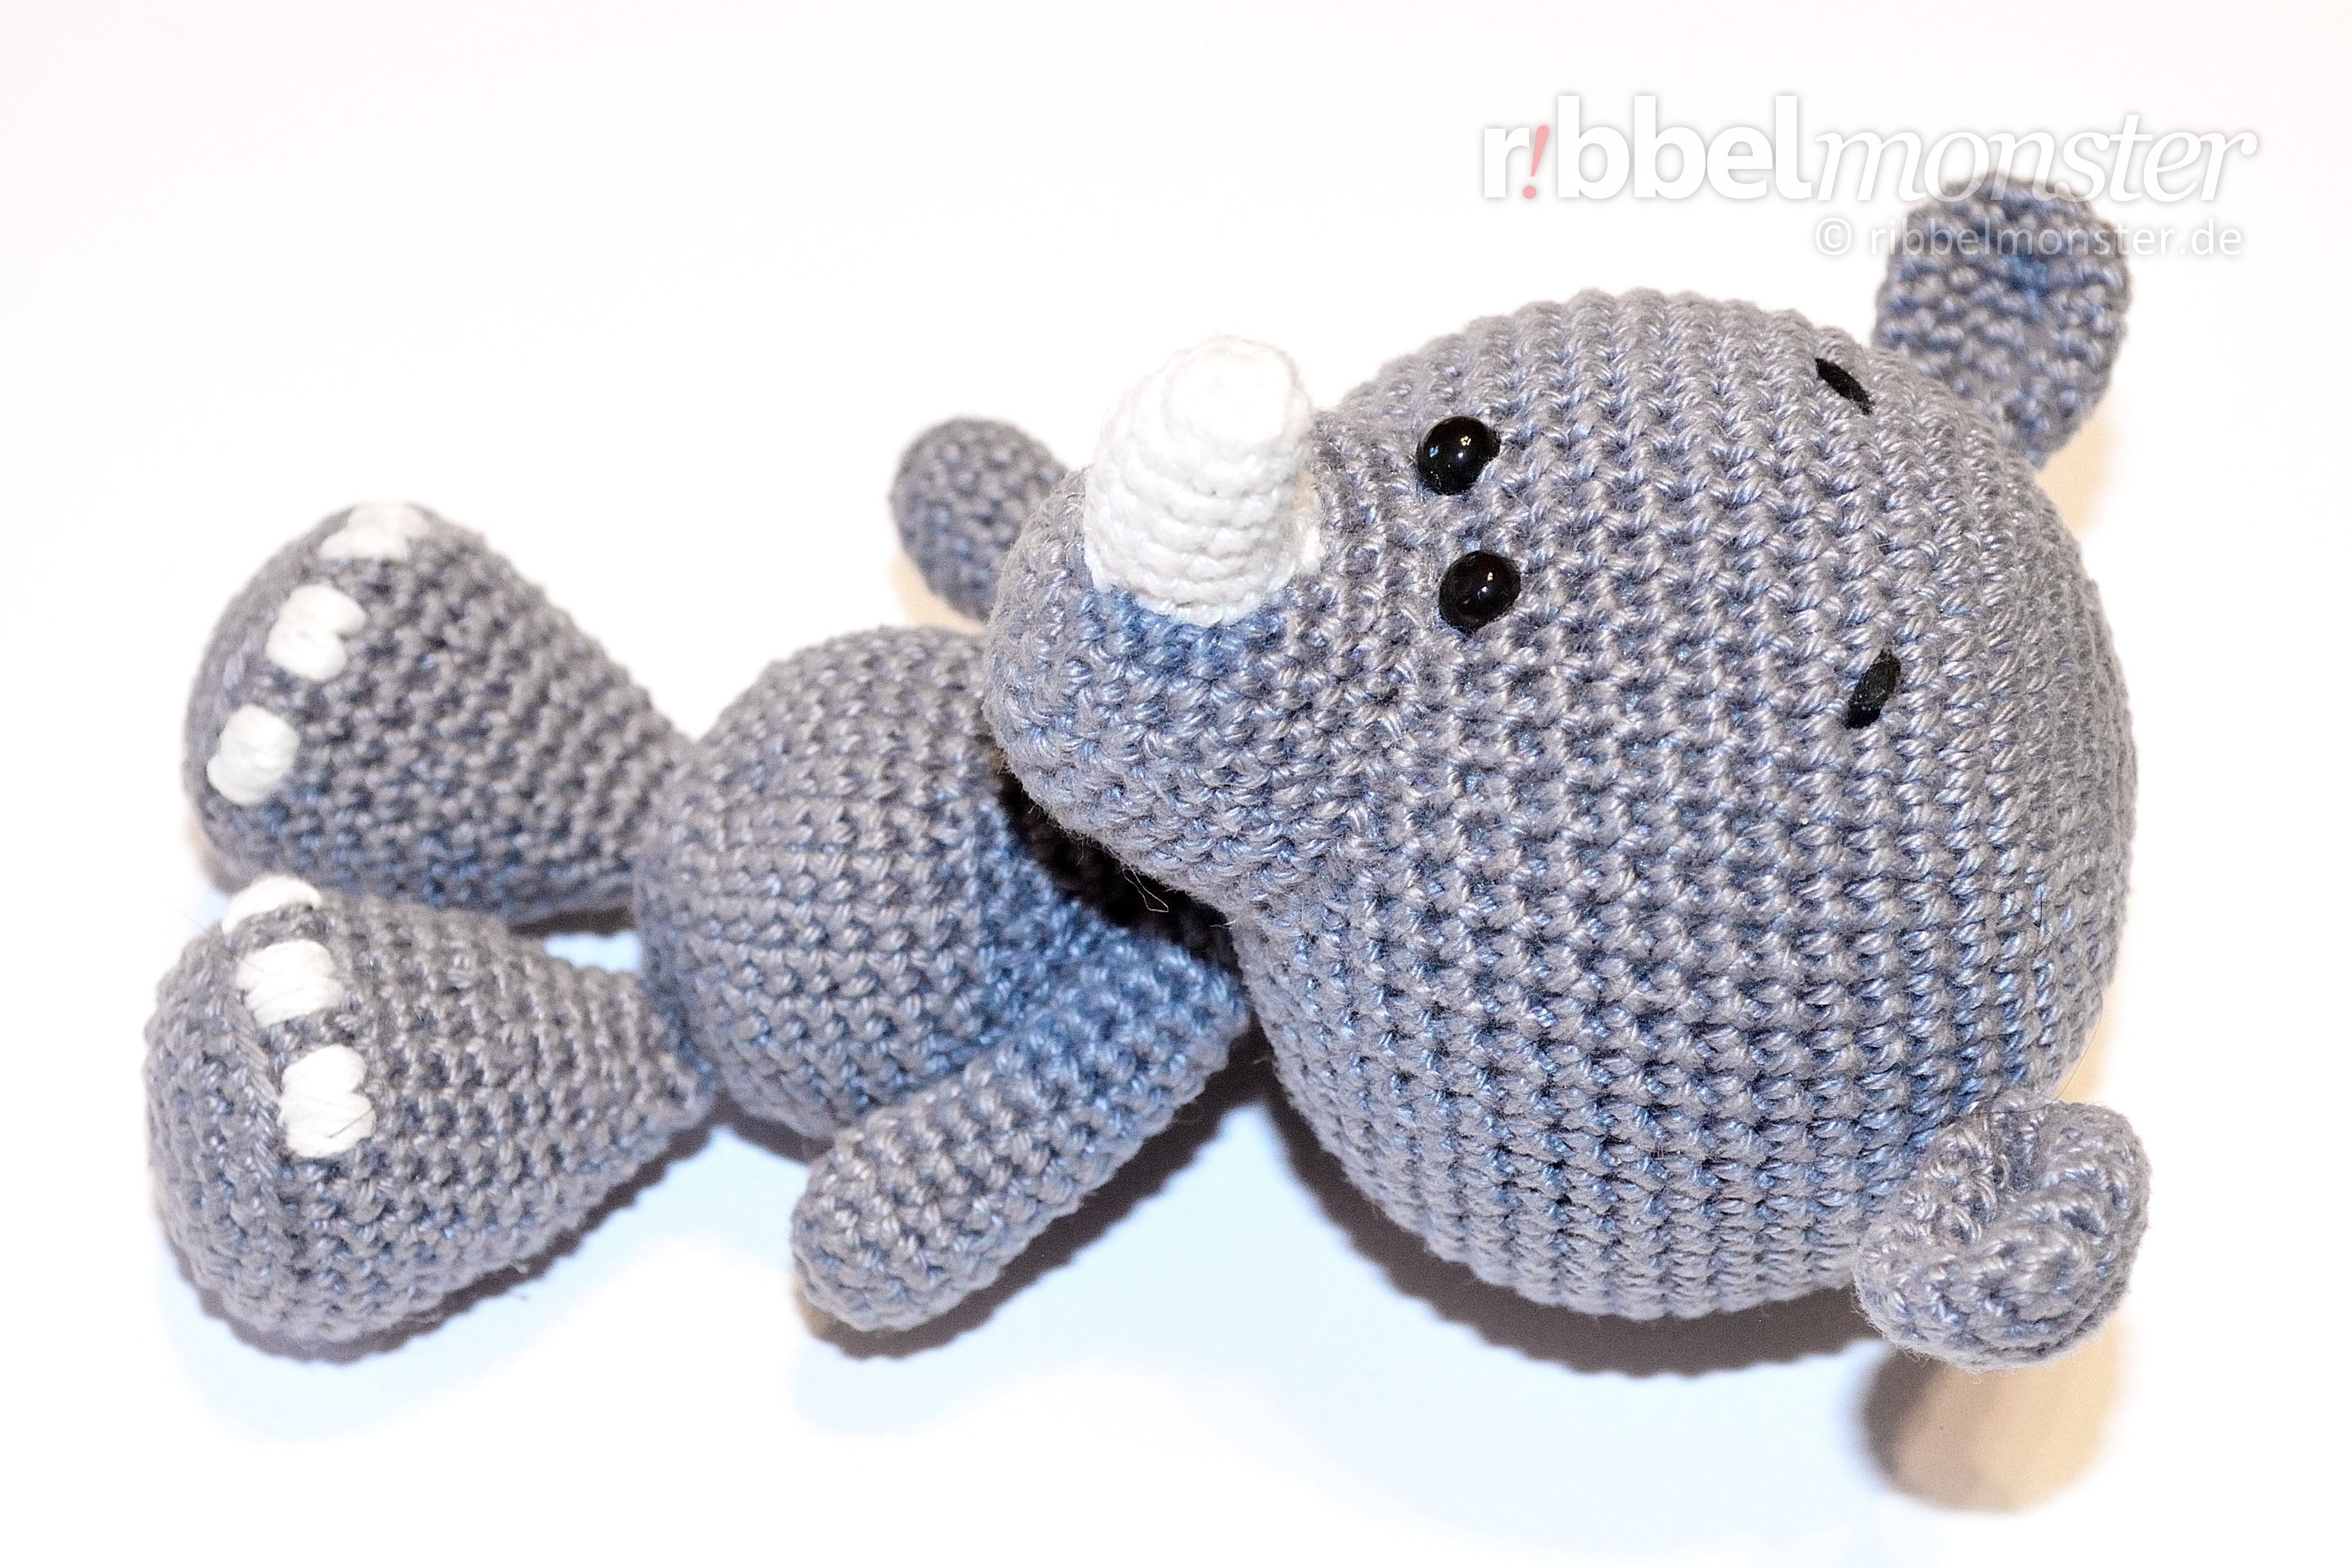 Amigurumi - Crochet Rhino - Piko - free crochet pattern - crochet pattern